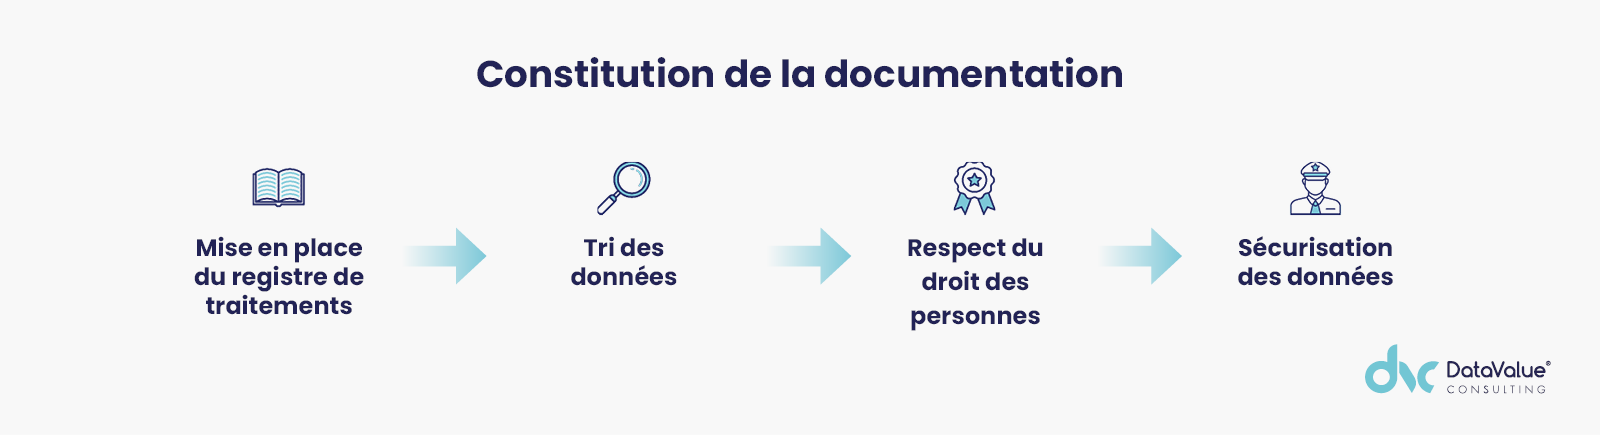 Constitution de la documentation